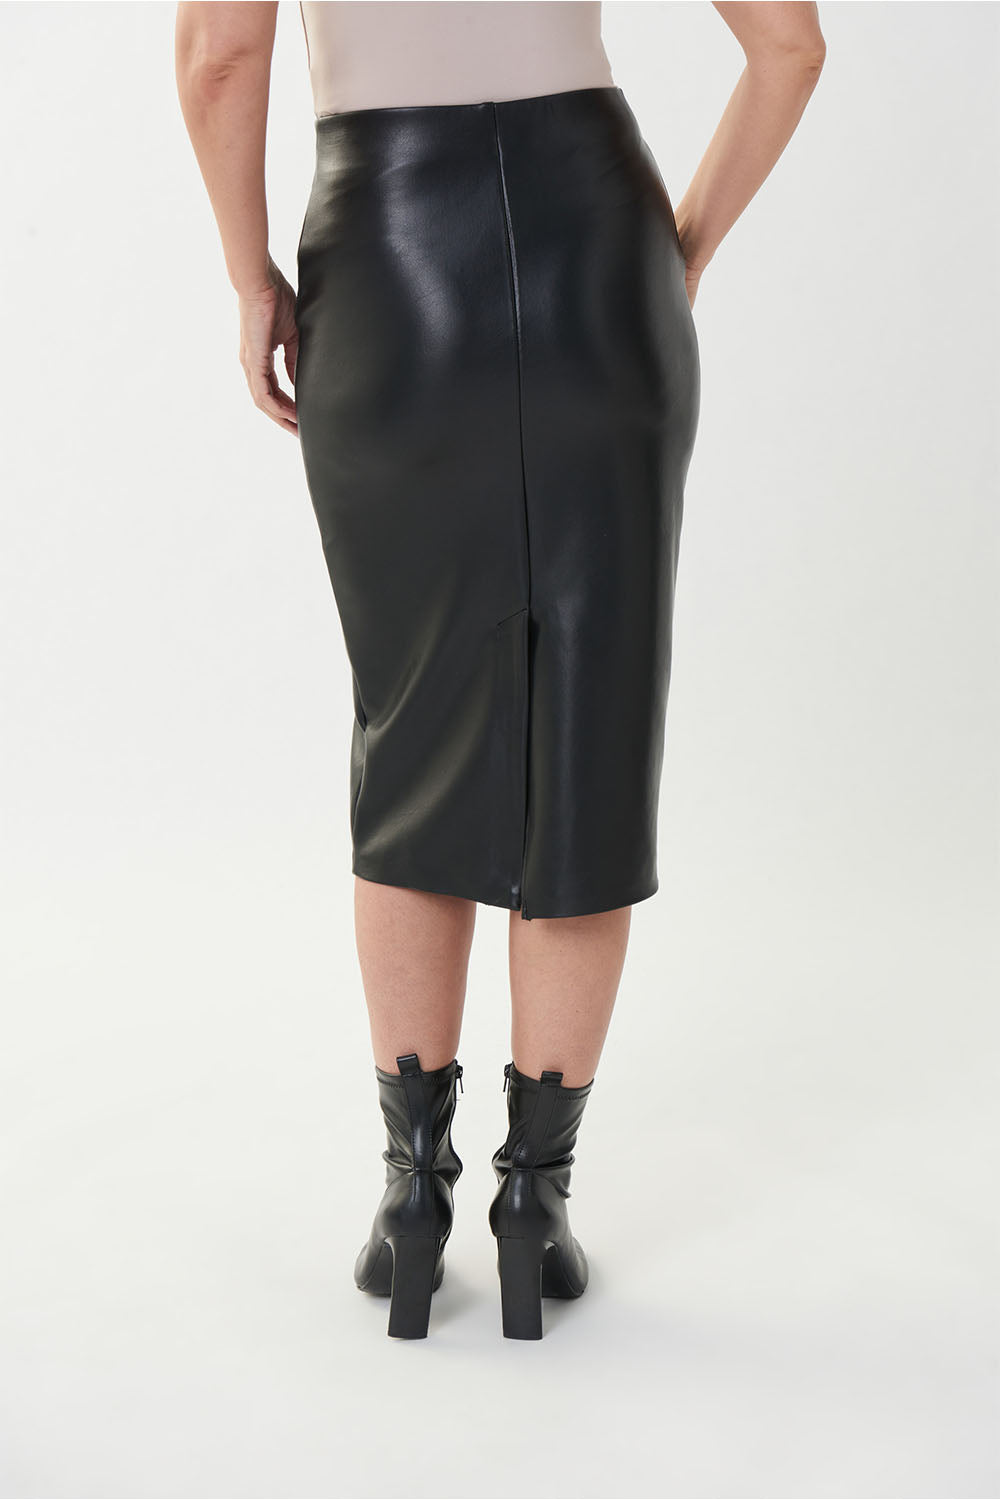 Joseph Ribkoff Faux Leather Pencil Skirt Jr223310